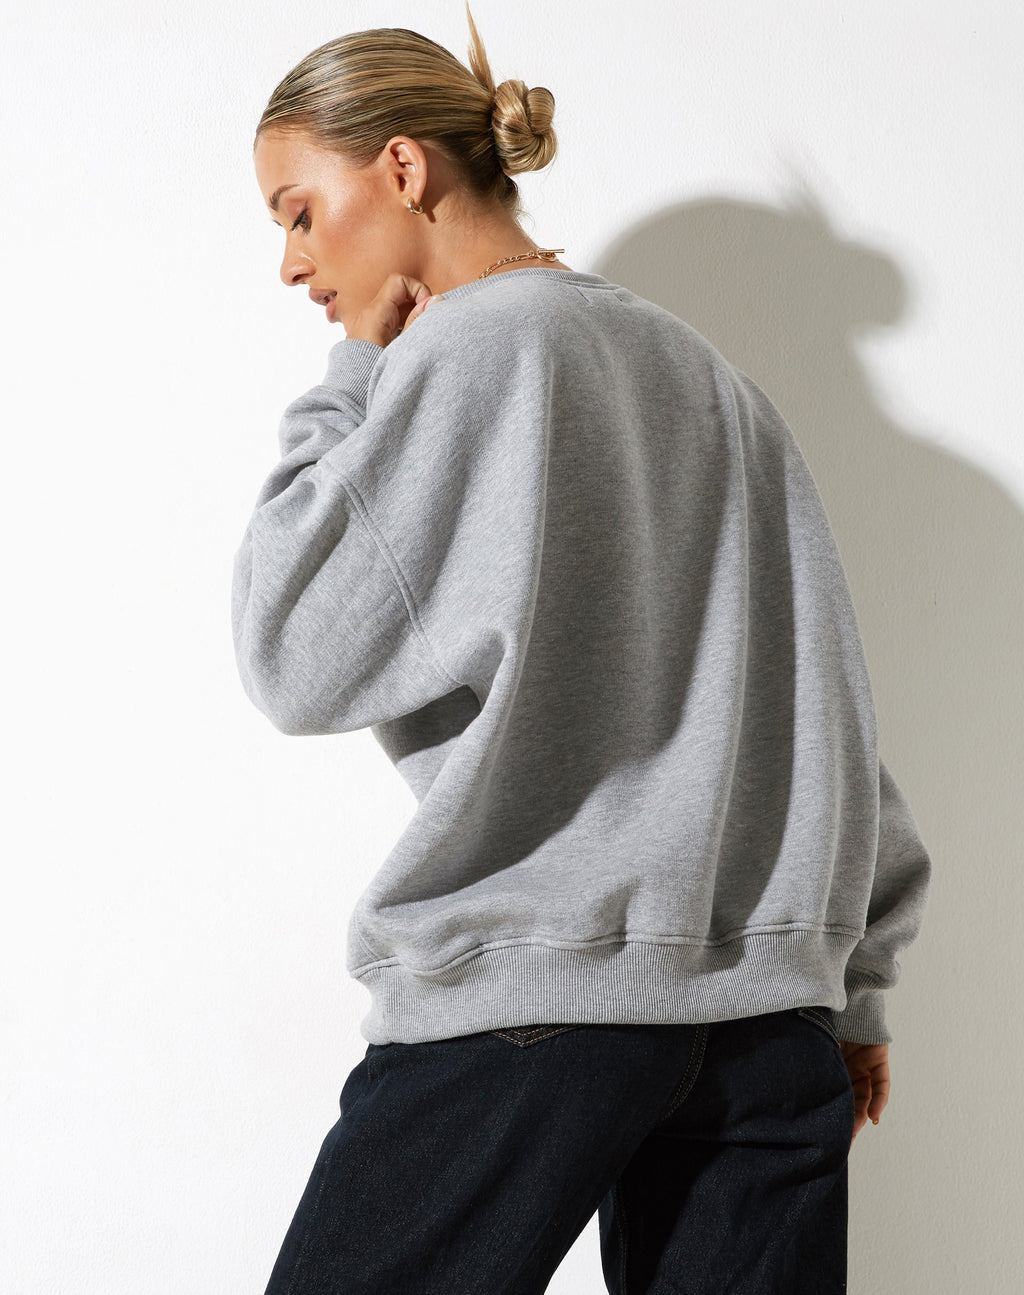 Glan Sweatshirt in Grey Marl with "M Classics" Embro